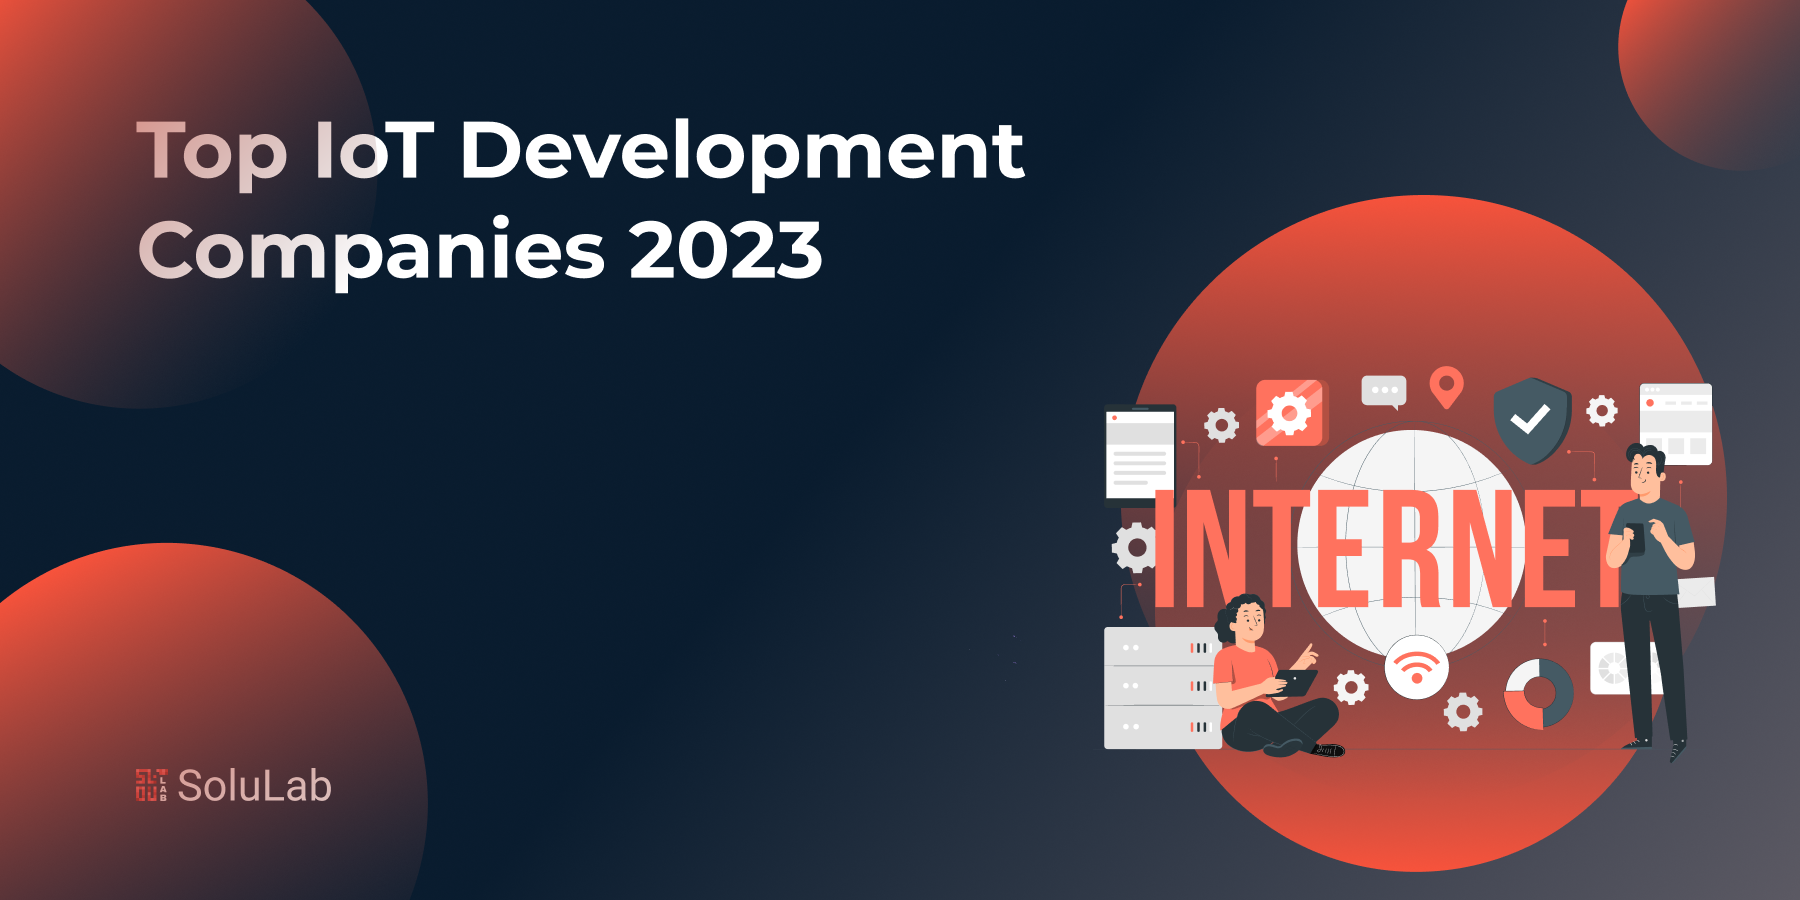 Top IoT Development Companies 2023